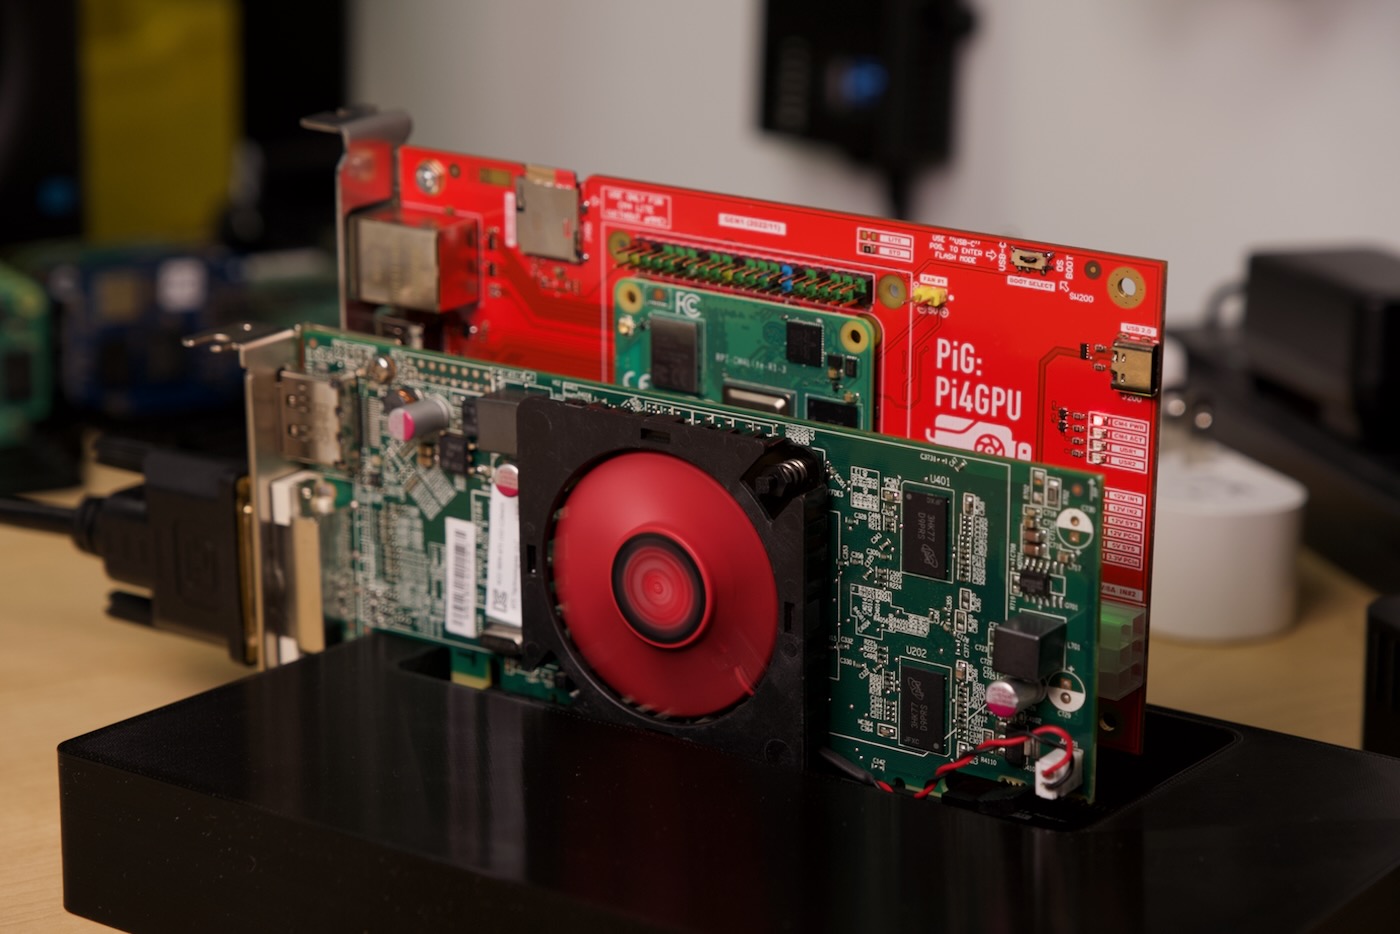 Pi4GPU with AMD Radeon HD 7450 Graphics Card